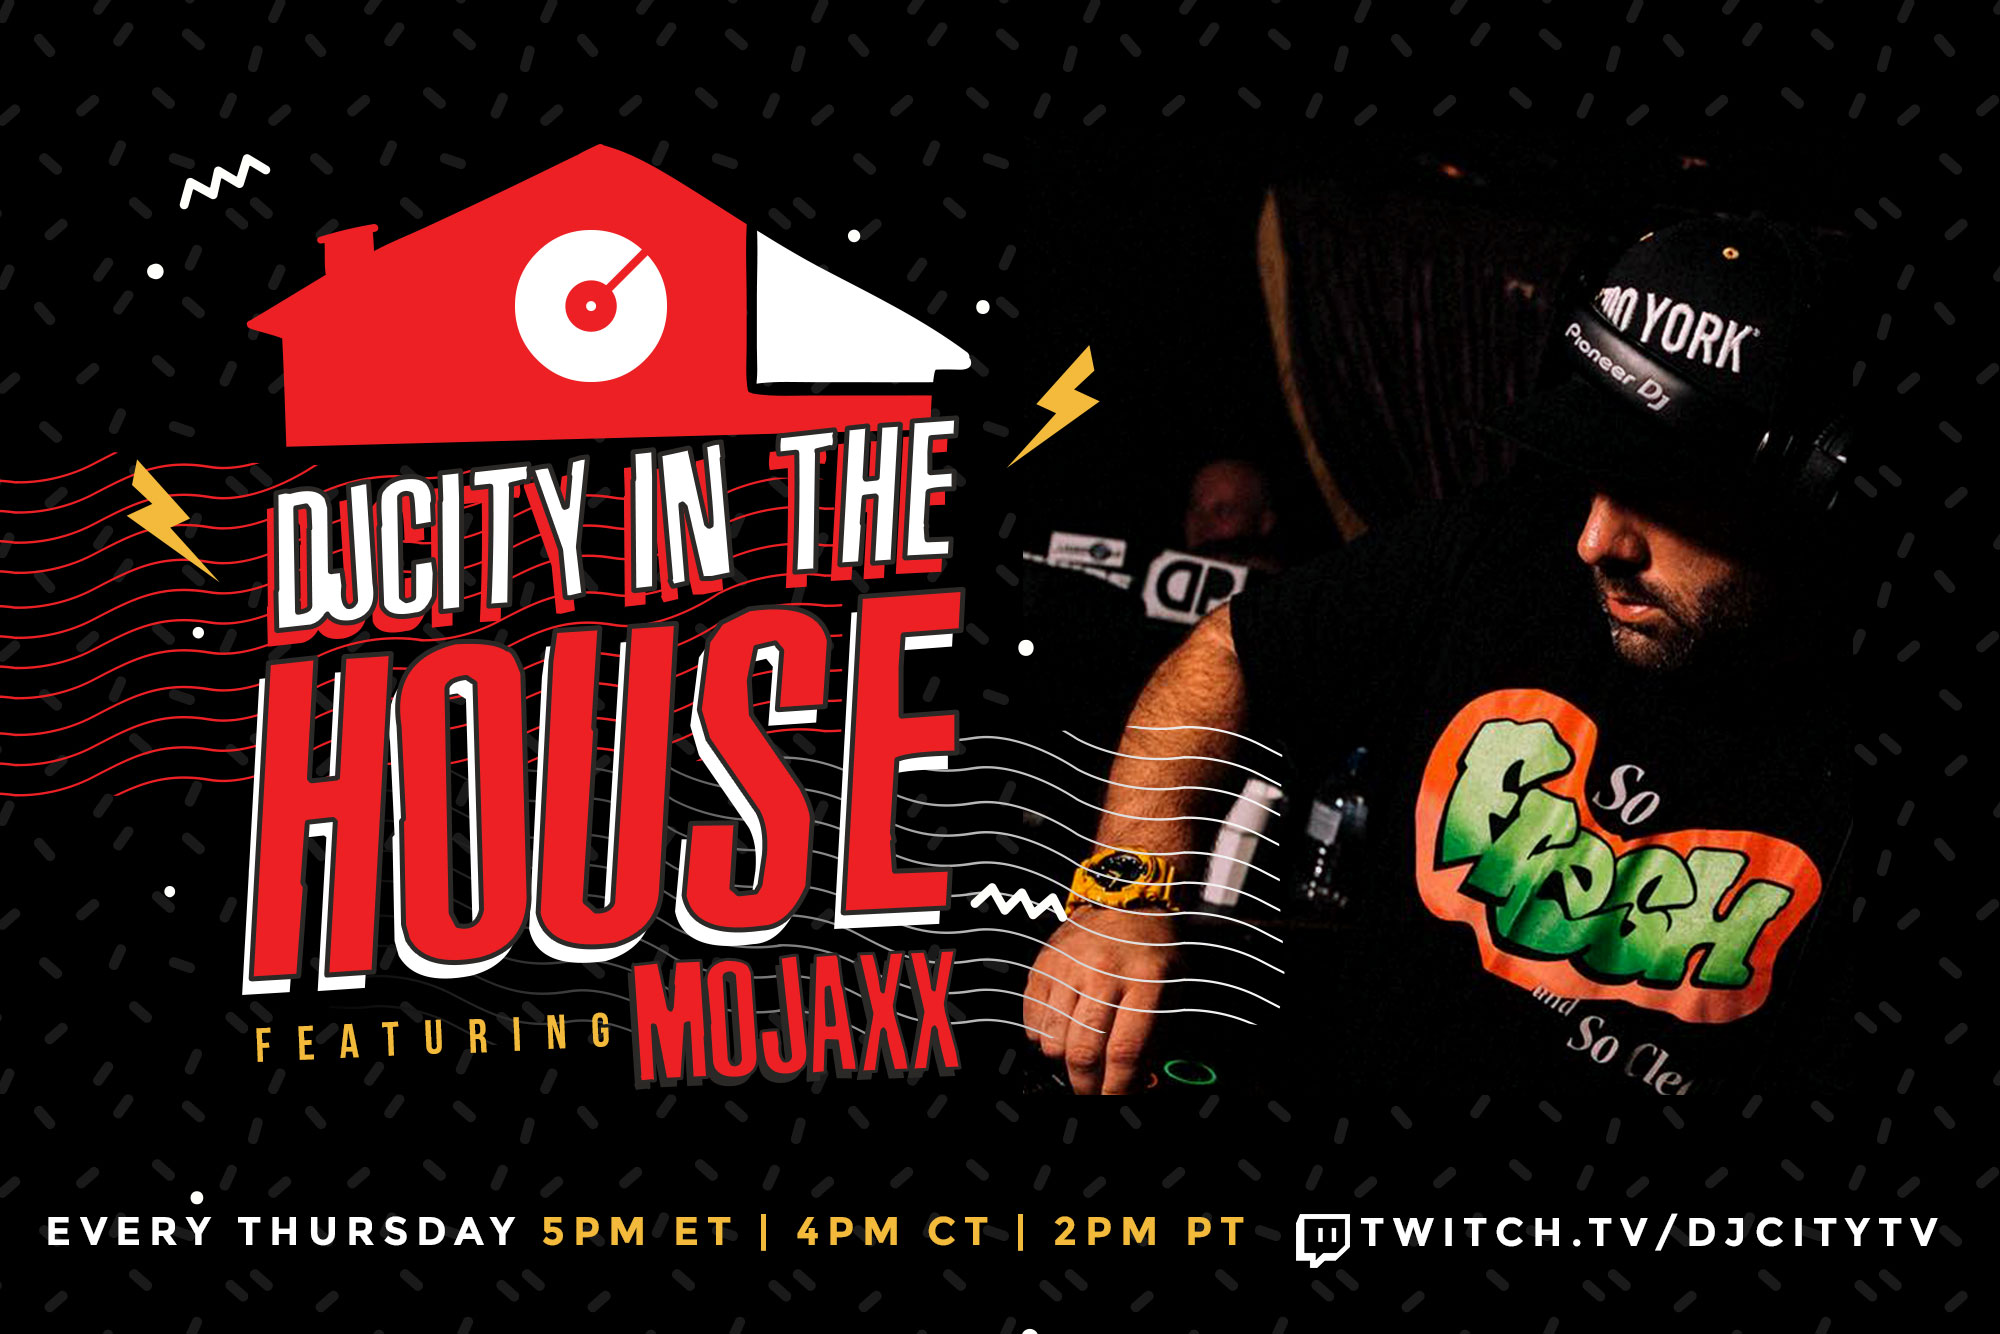 DJcityTV Launches New Twitch Series, ‘DJcity in the House’ Feat. Mojaxx